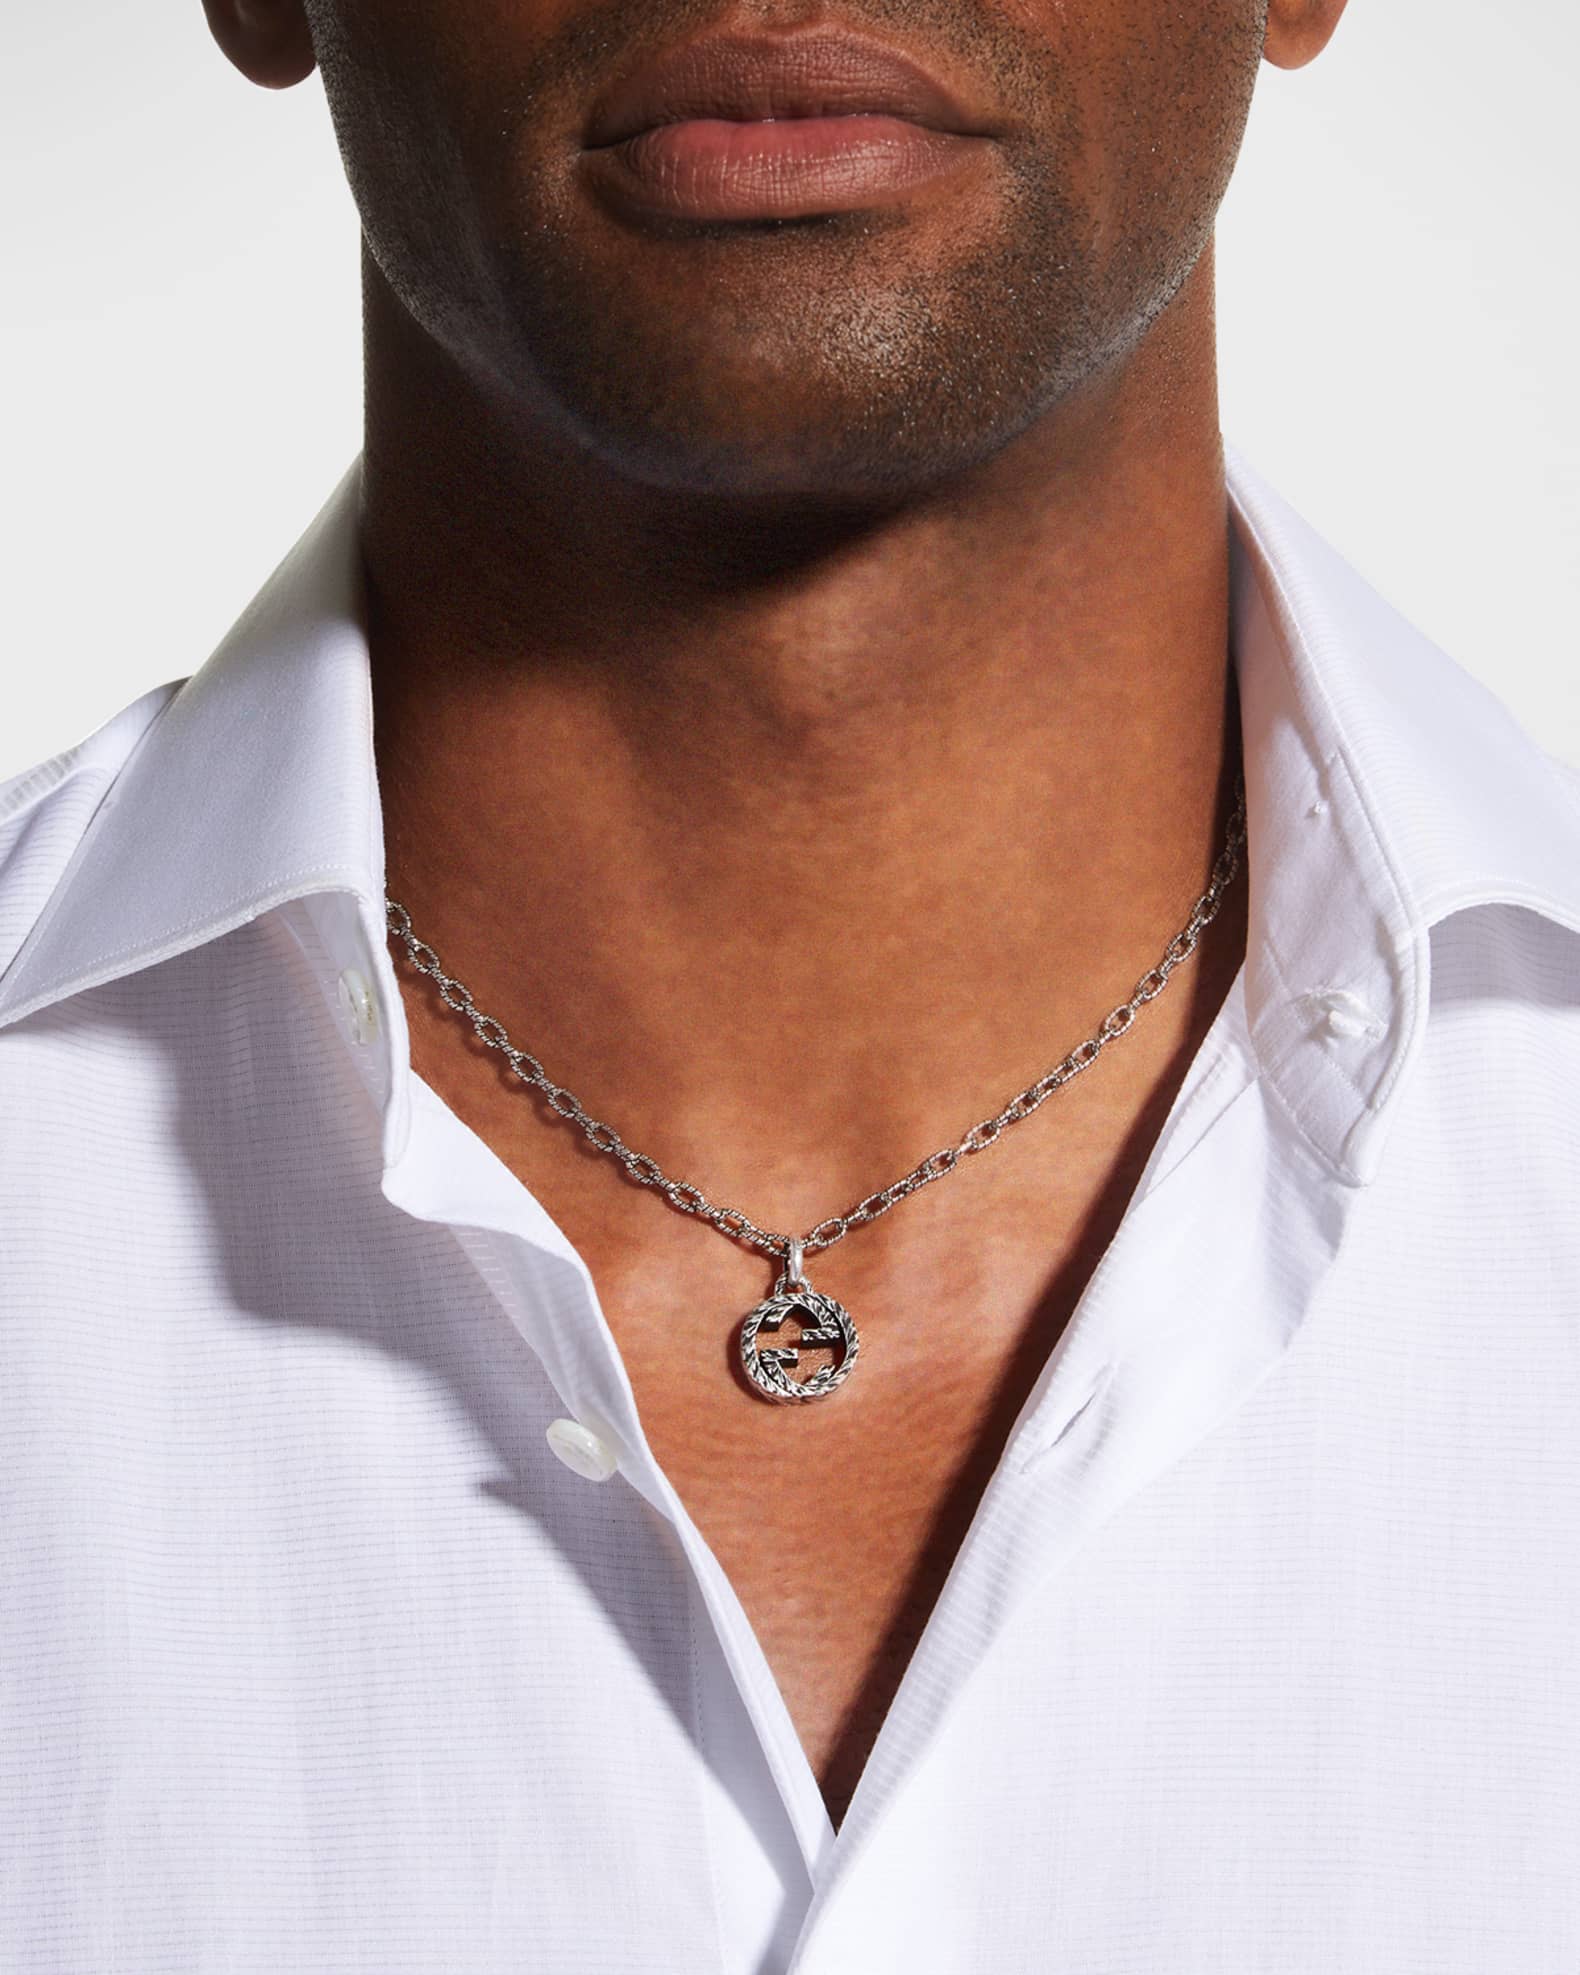 Gucci Men's Interlocking G Pendant Necklace